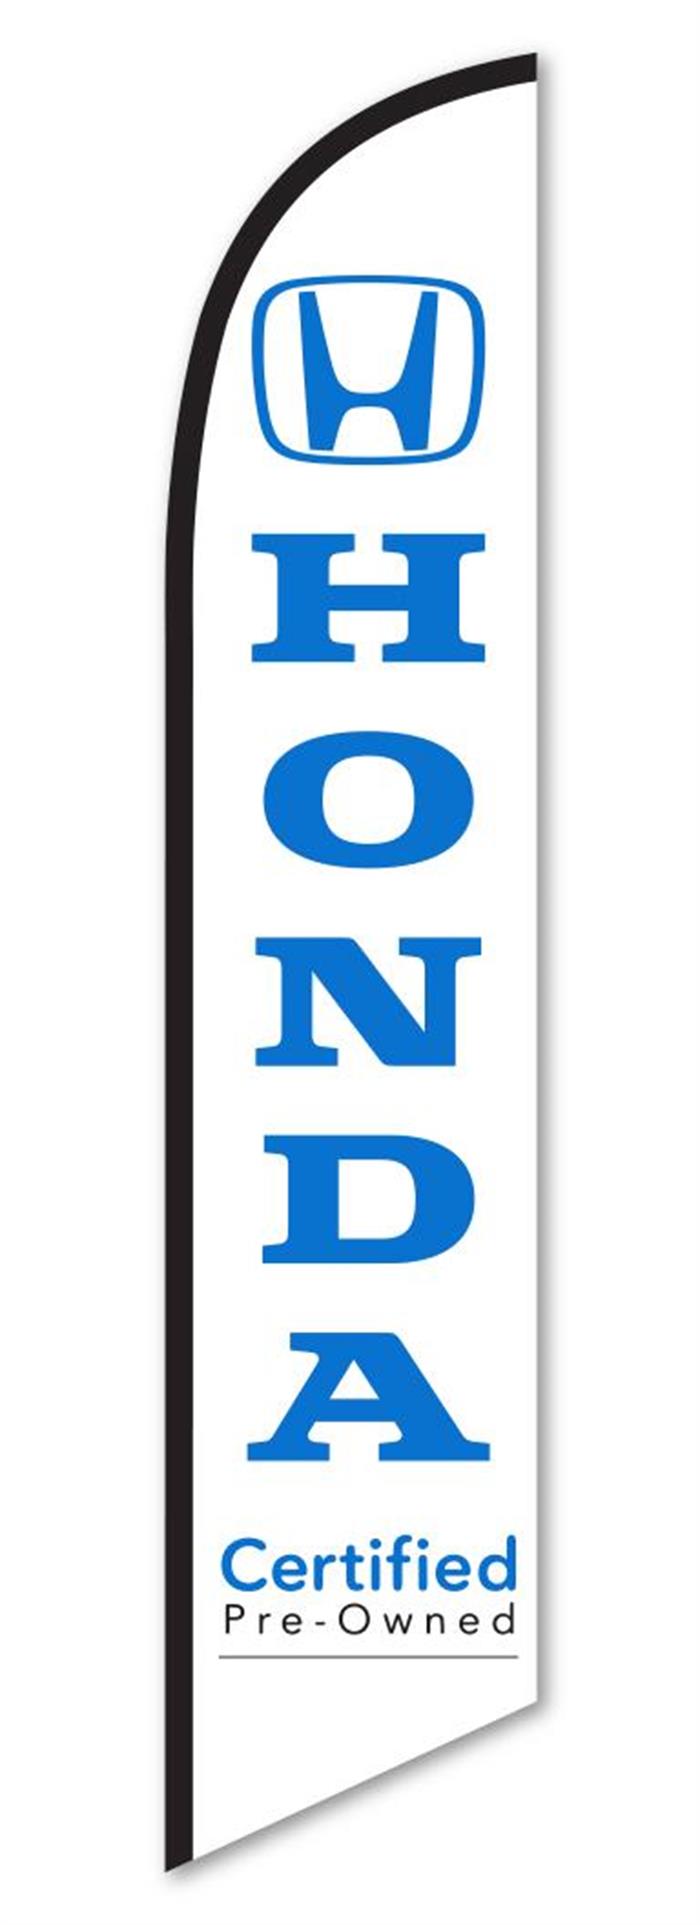 Honda Used Cars - Swooper Banner